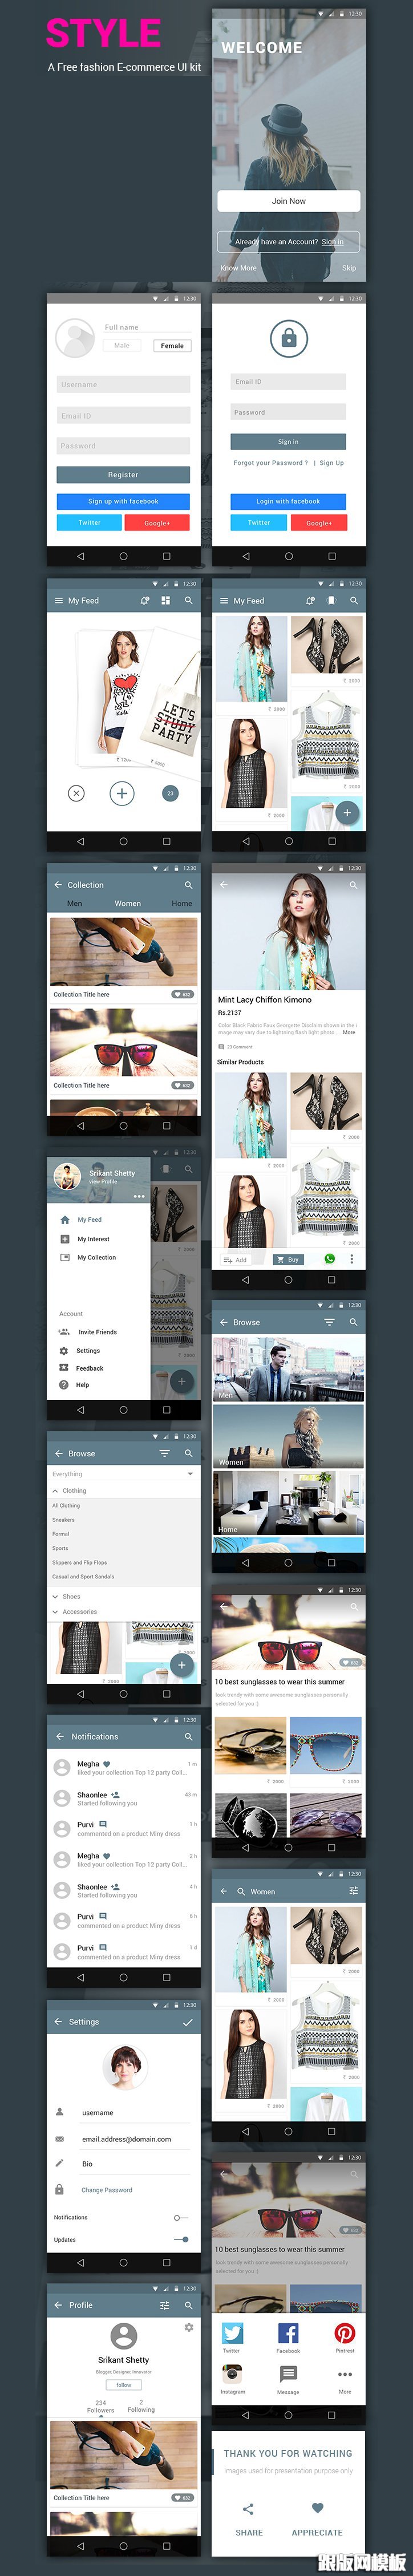 Style-Free-e-commerce-App-UI-Kit